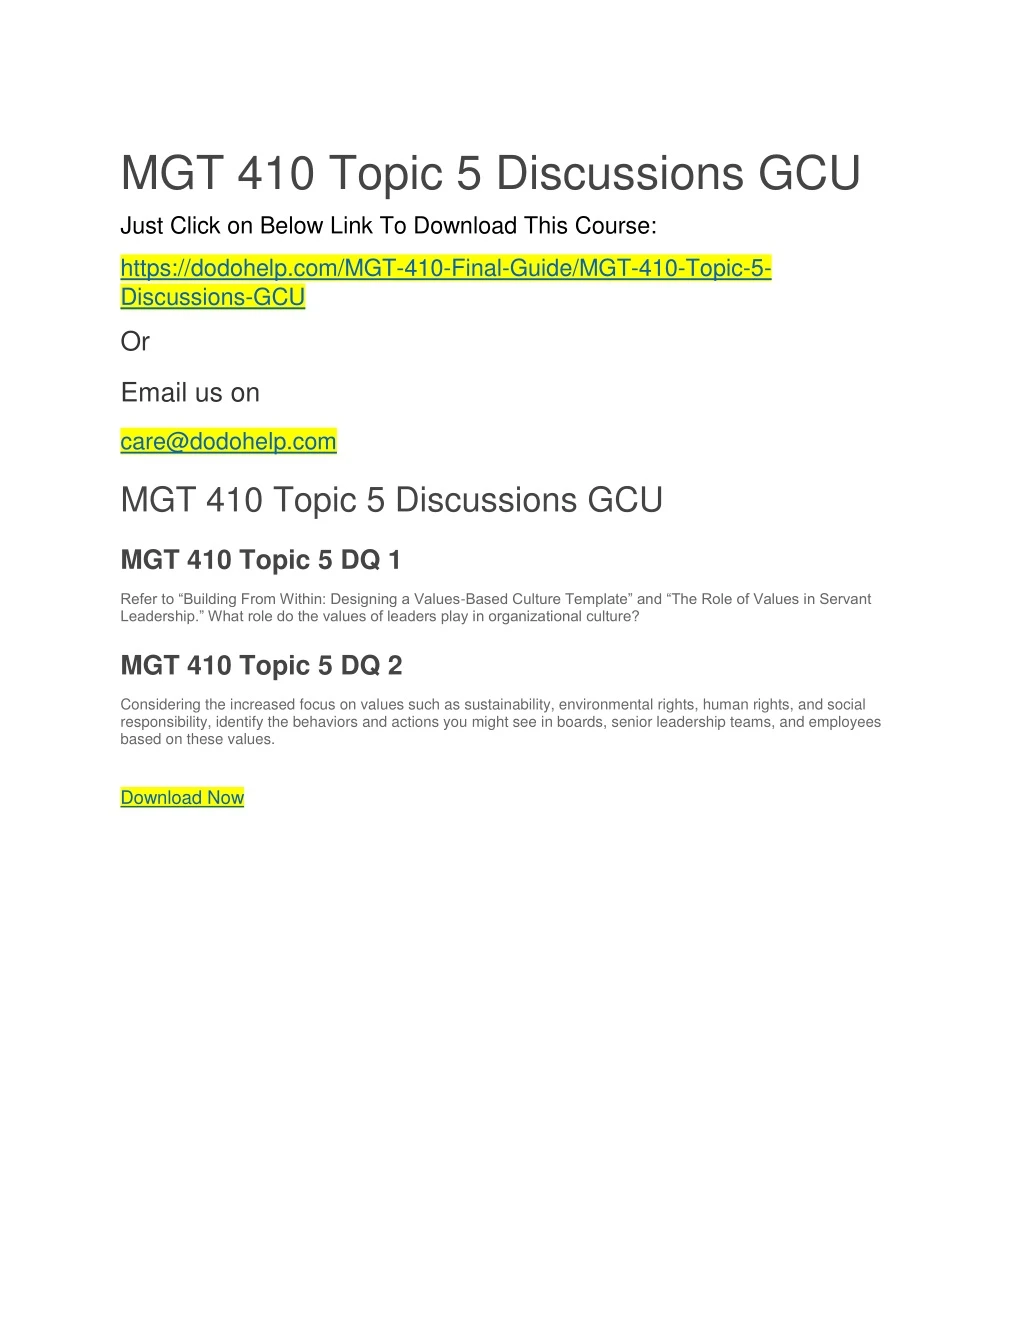 mgt 410 topic 5 discussions gcu just click